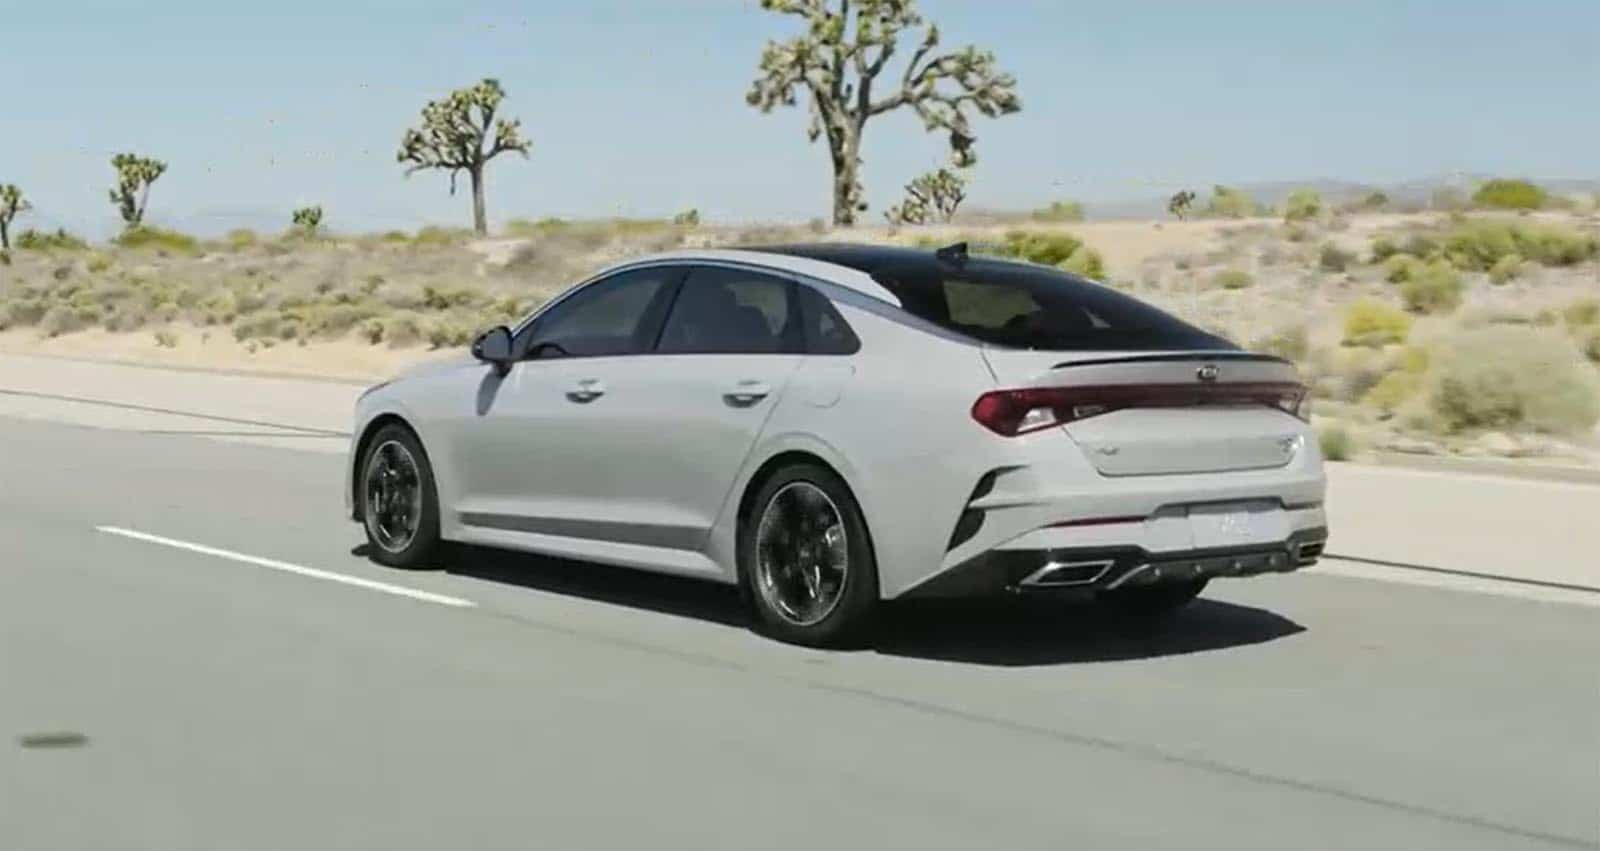 Kia Hopes to “Disrupt” Midsize Sedan Market with New K5 - The Detroit